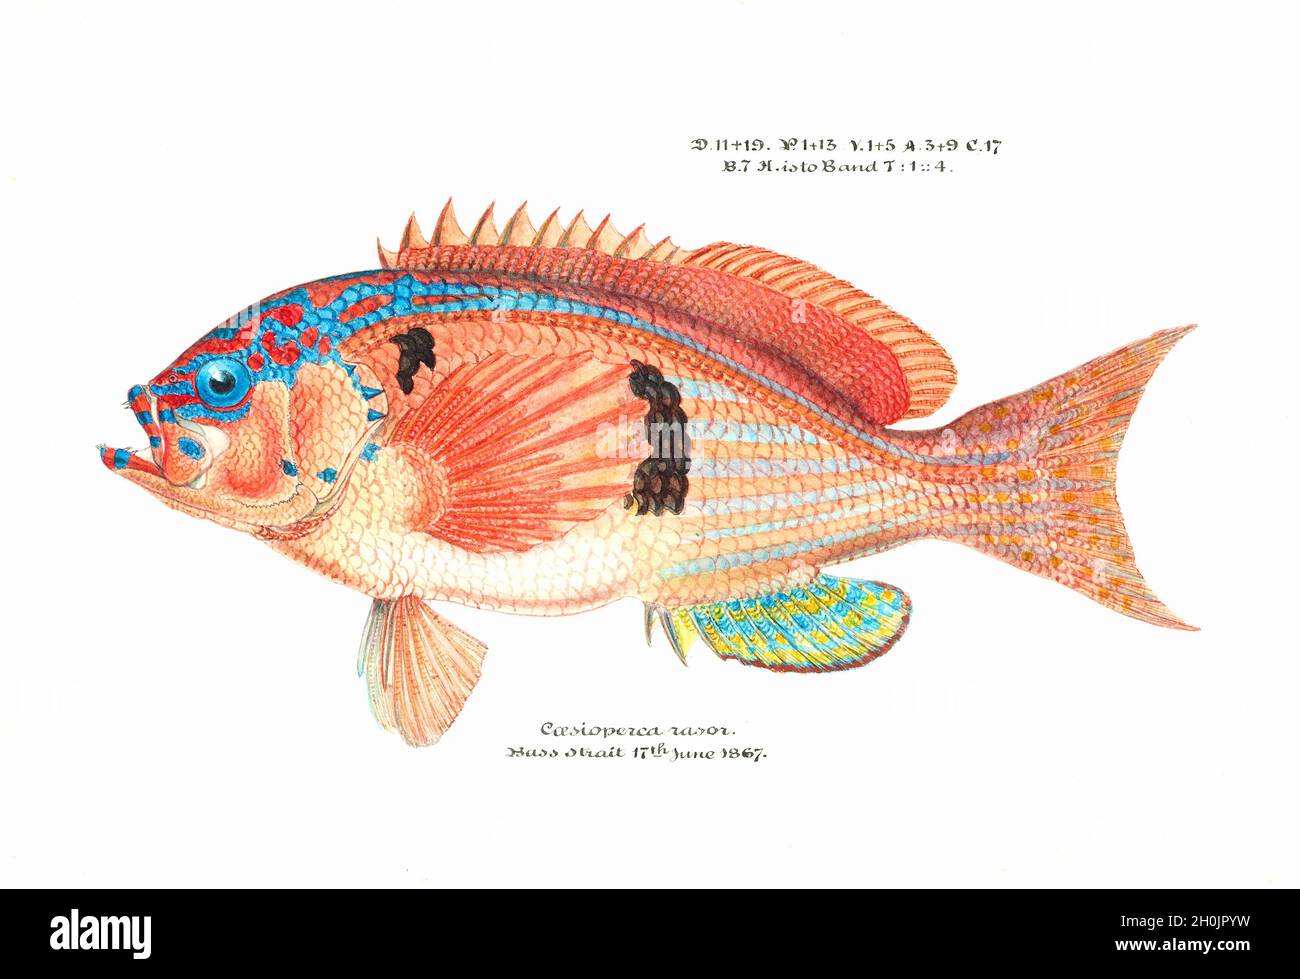 Frank Edward Clarke vintage fish illustration - Sea Perch - Caesioperca rasor Stock Photo